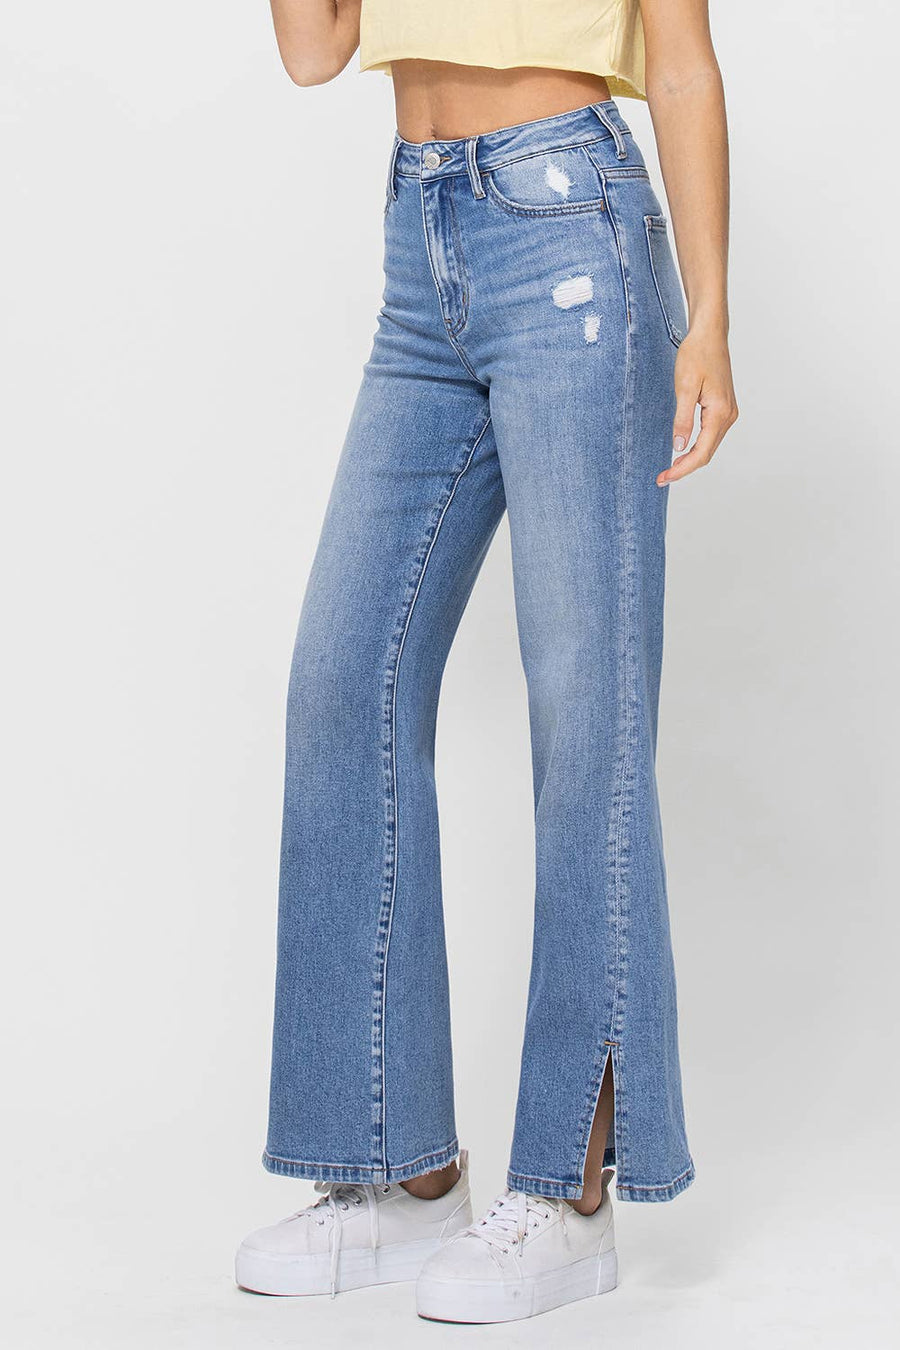 “Sedona” 90'S Vintage Super High Rise Flare Jeans